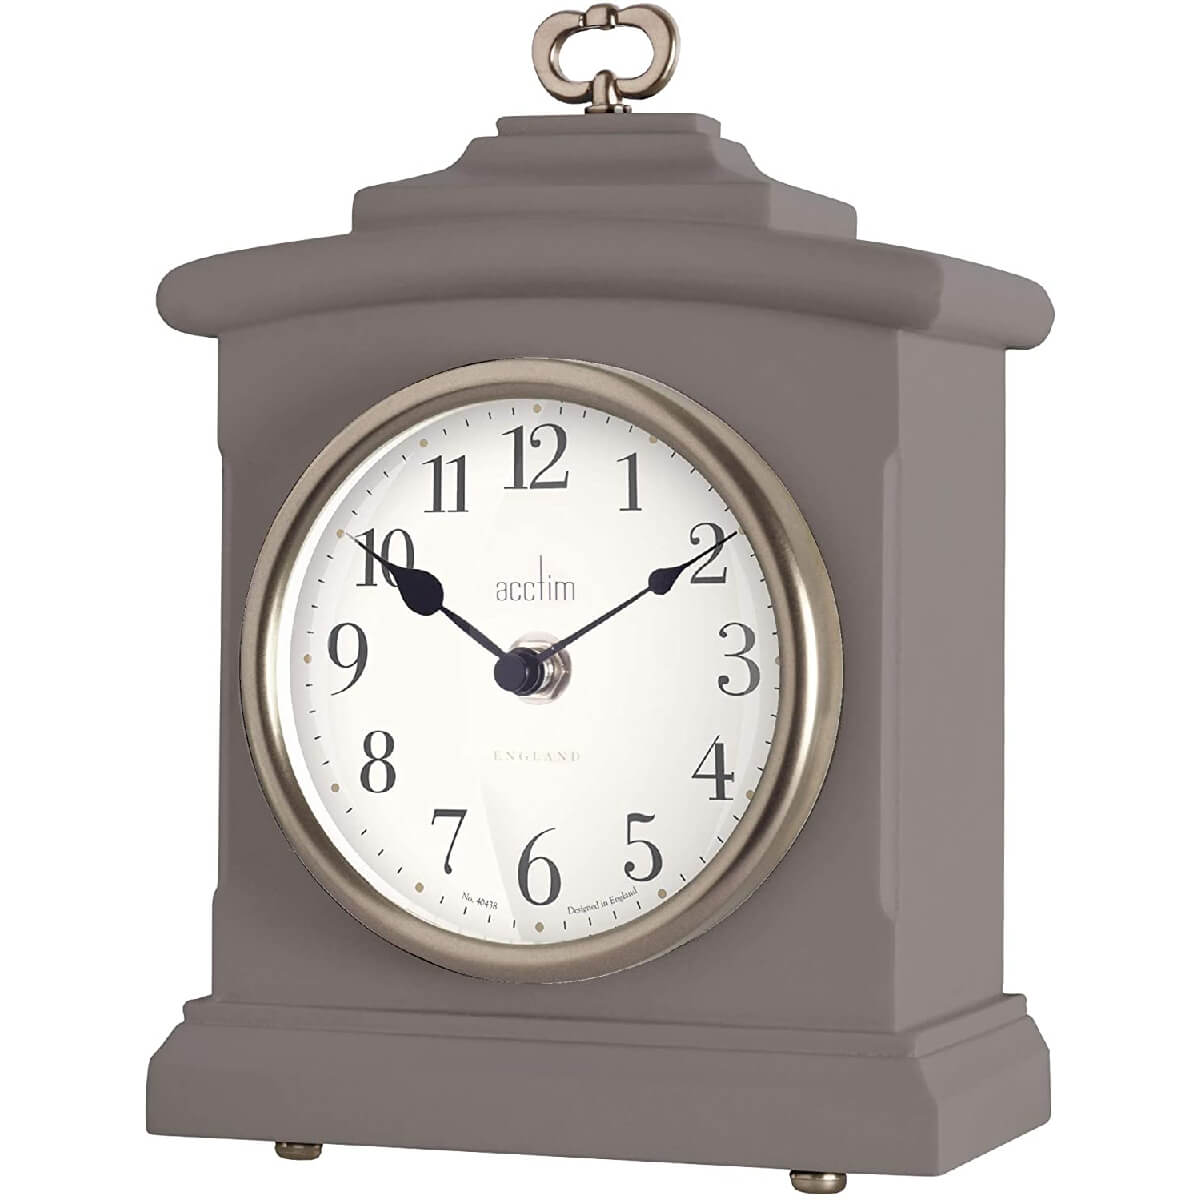 Acctim Heyford Mantle Clock in Mocha – DIMANT